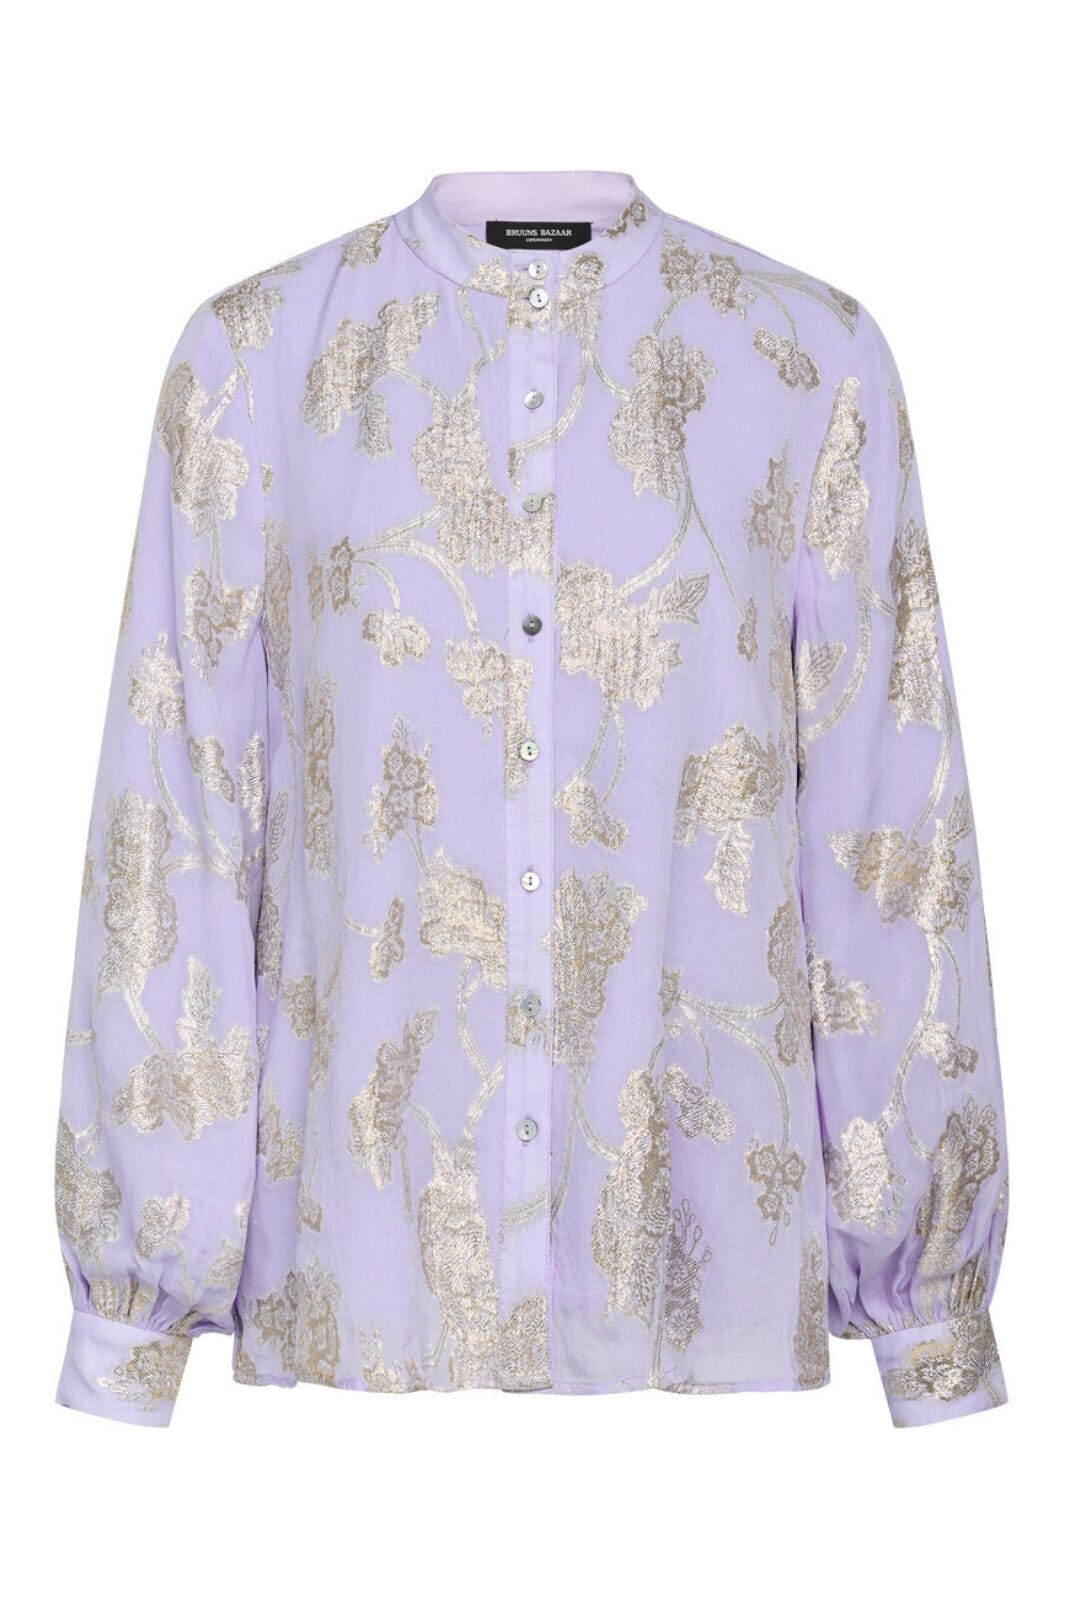 Bruuns Bazaar - Juneberry Charlottas shirt - Purple Heather Skjorter 